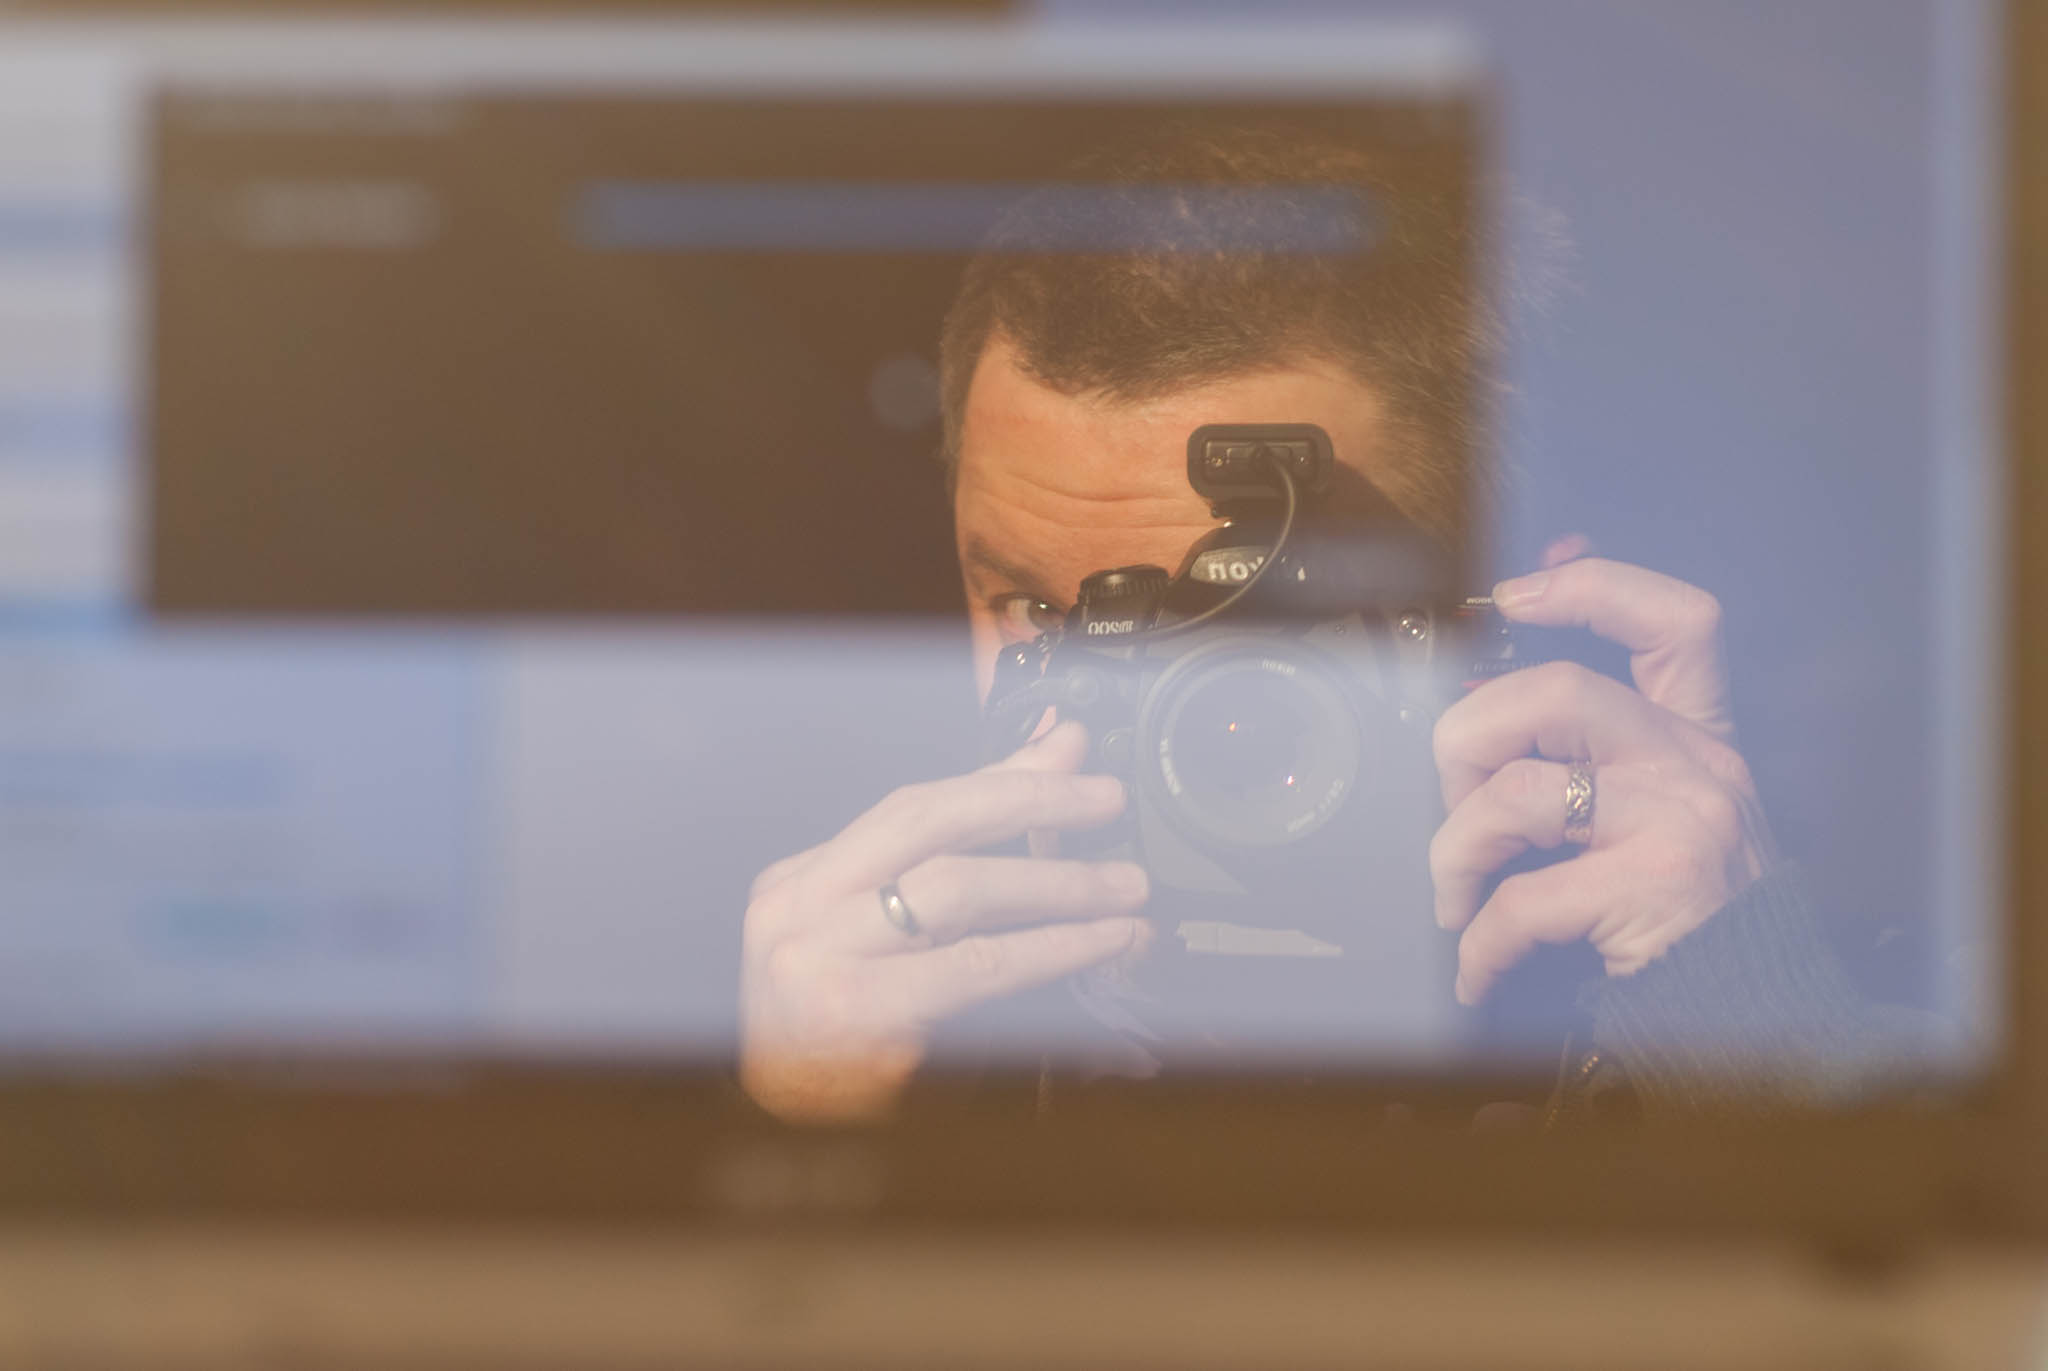 Reflection of man taking a self-portrait with a Nikon DSLR